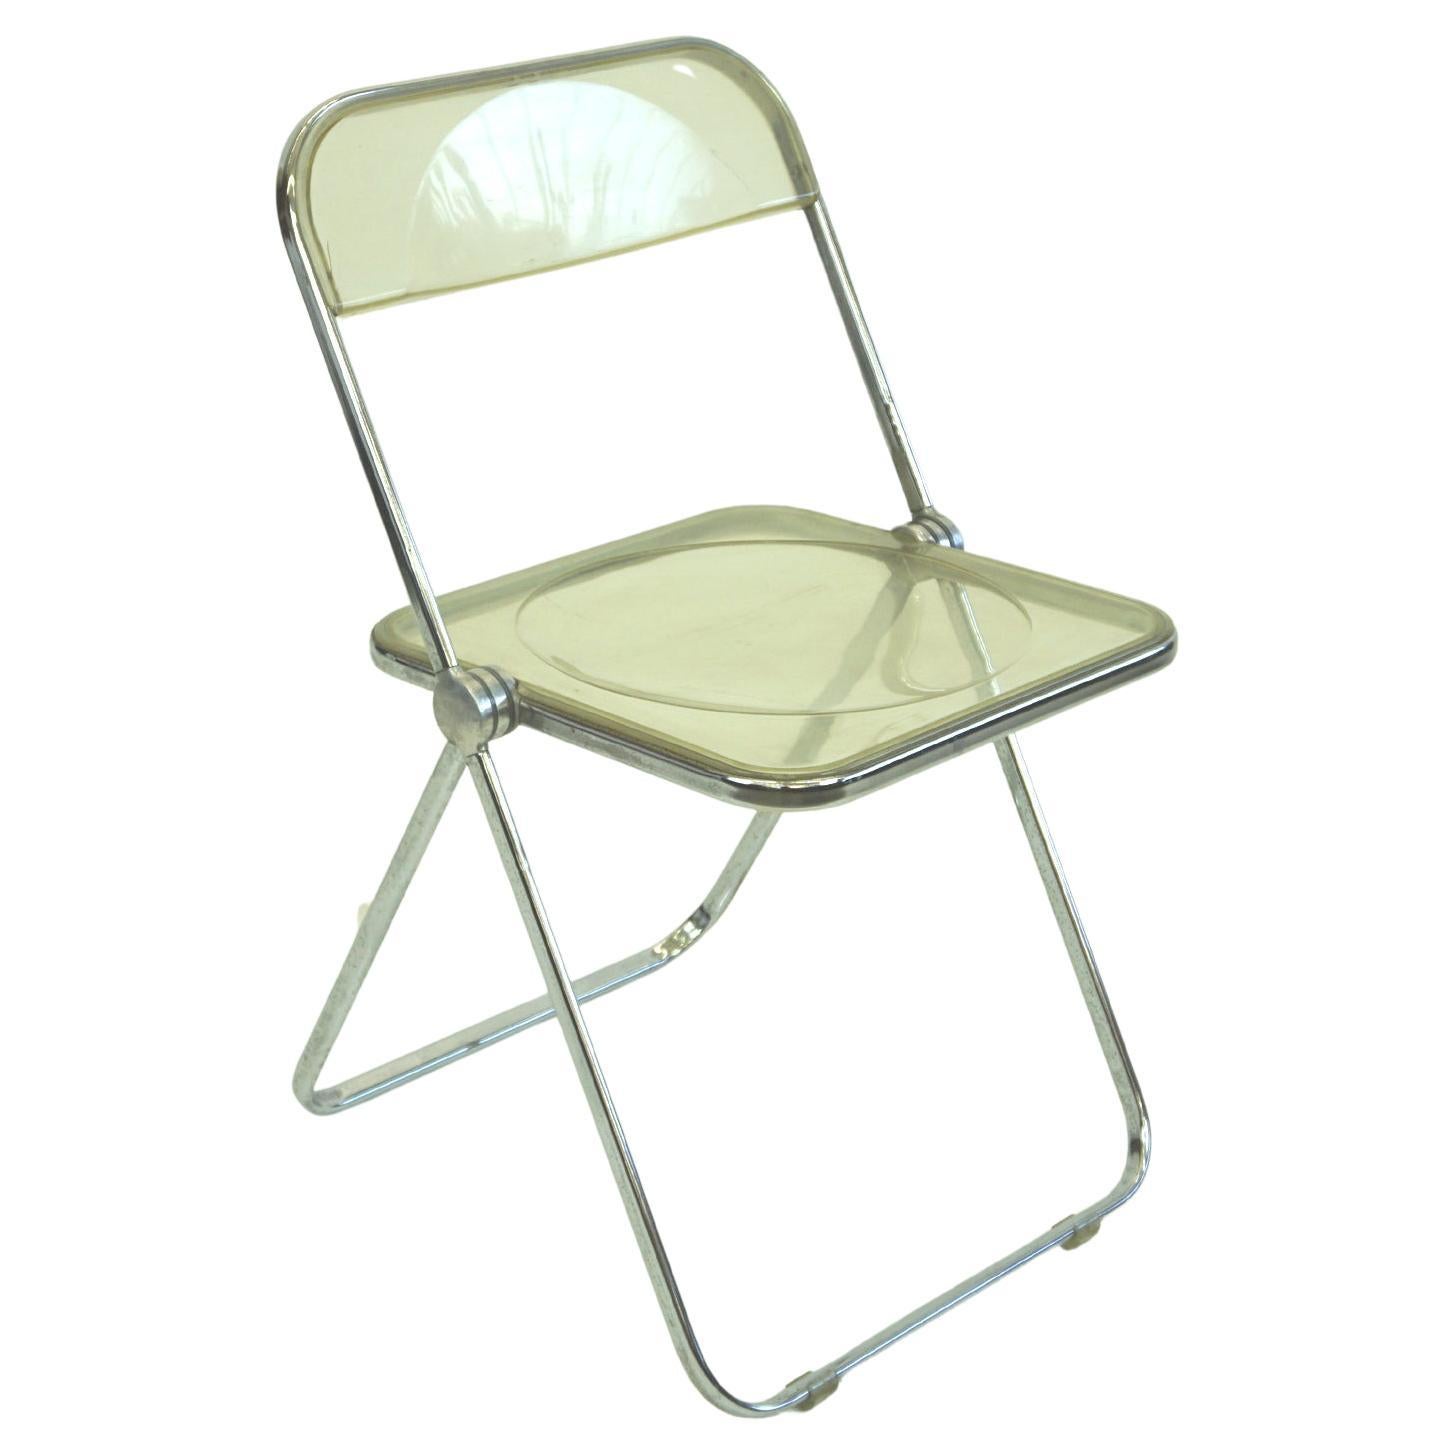 Italian 1960s Chrome and Lucite Plia Folding Chair by G. Piretti for Castelli